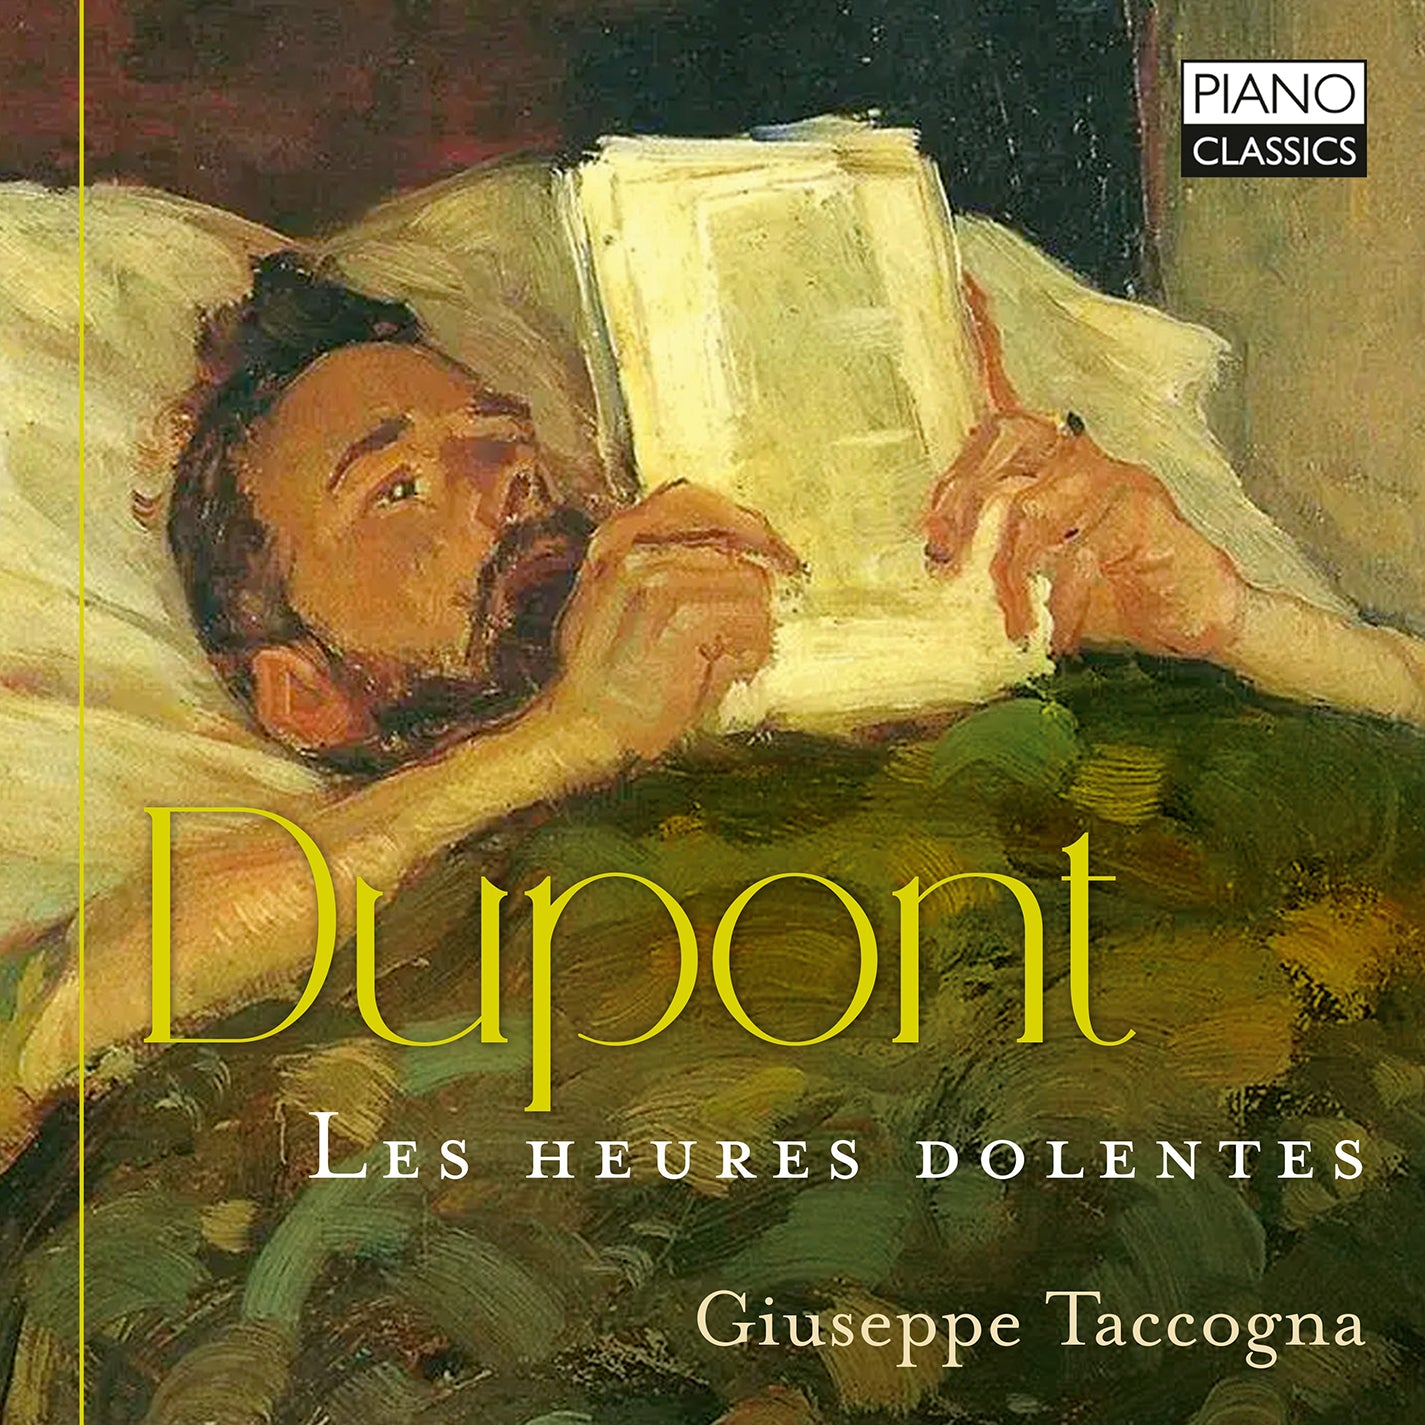 Dupont: Les heures dolentes - The Sad Hours / Taccogna